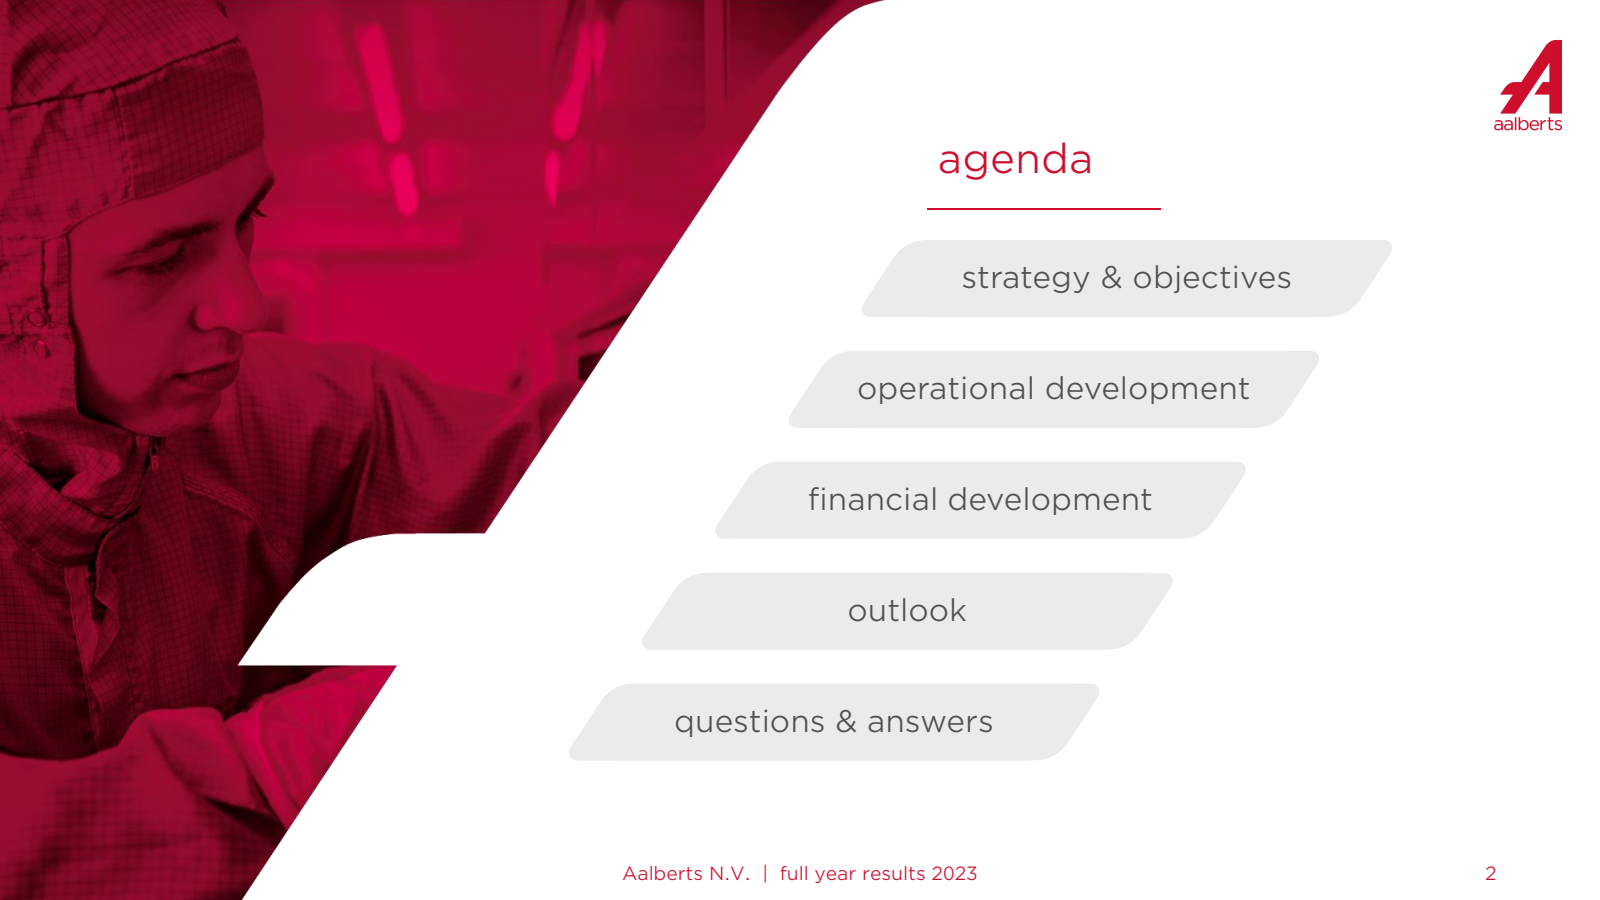 agenda 

strategy & 